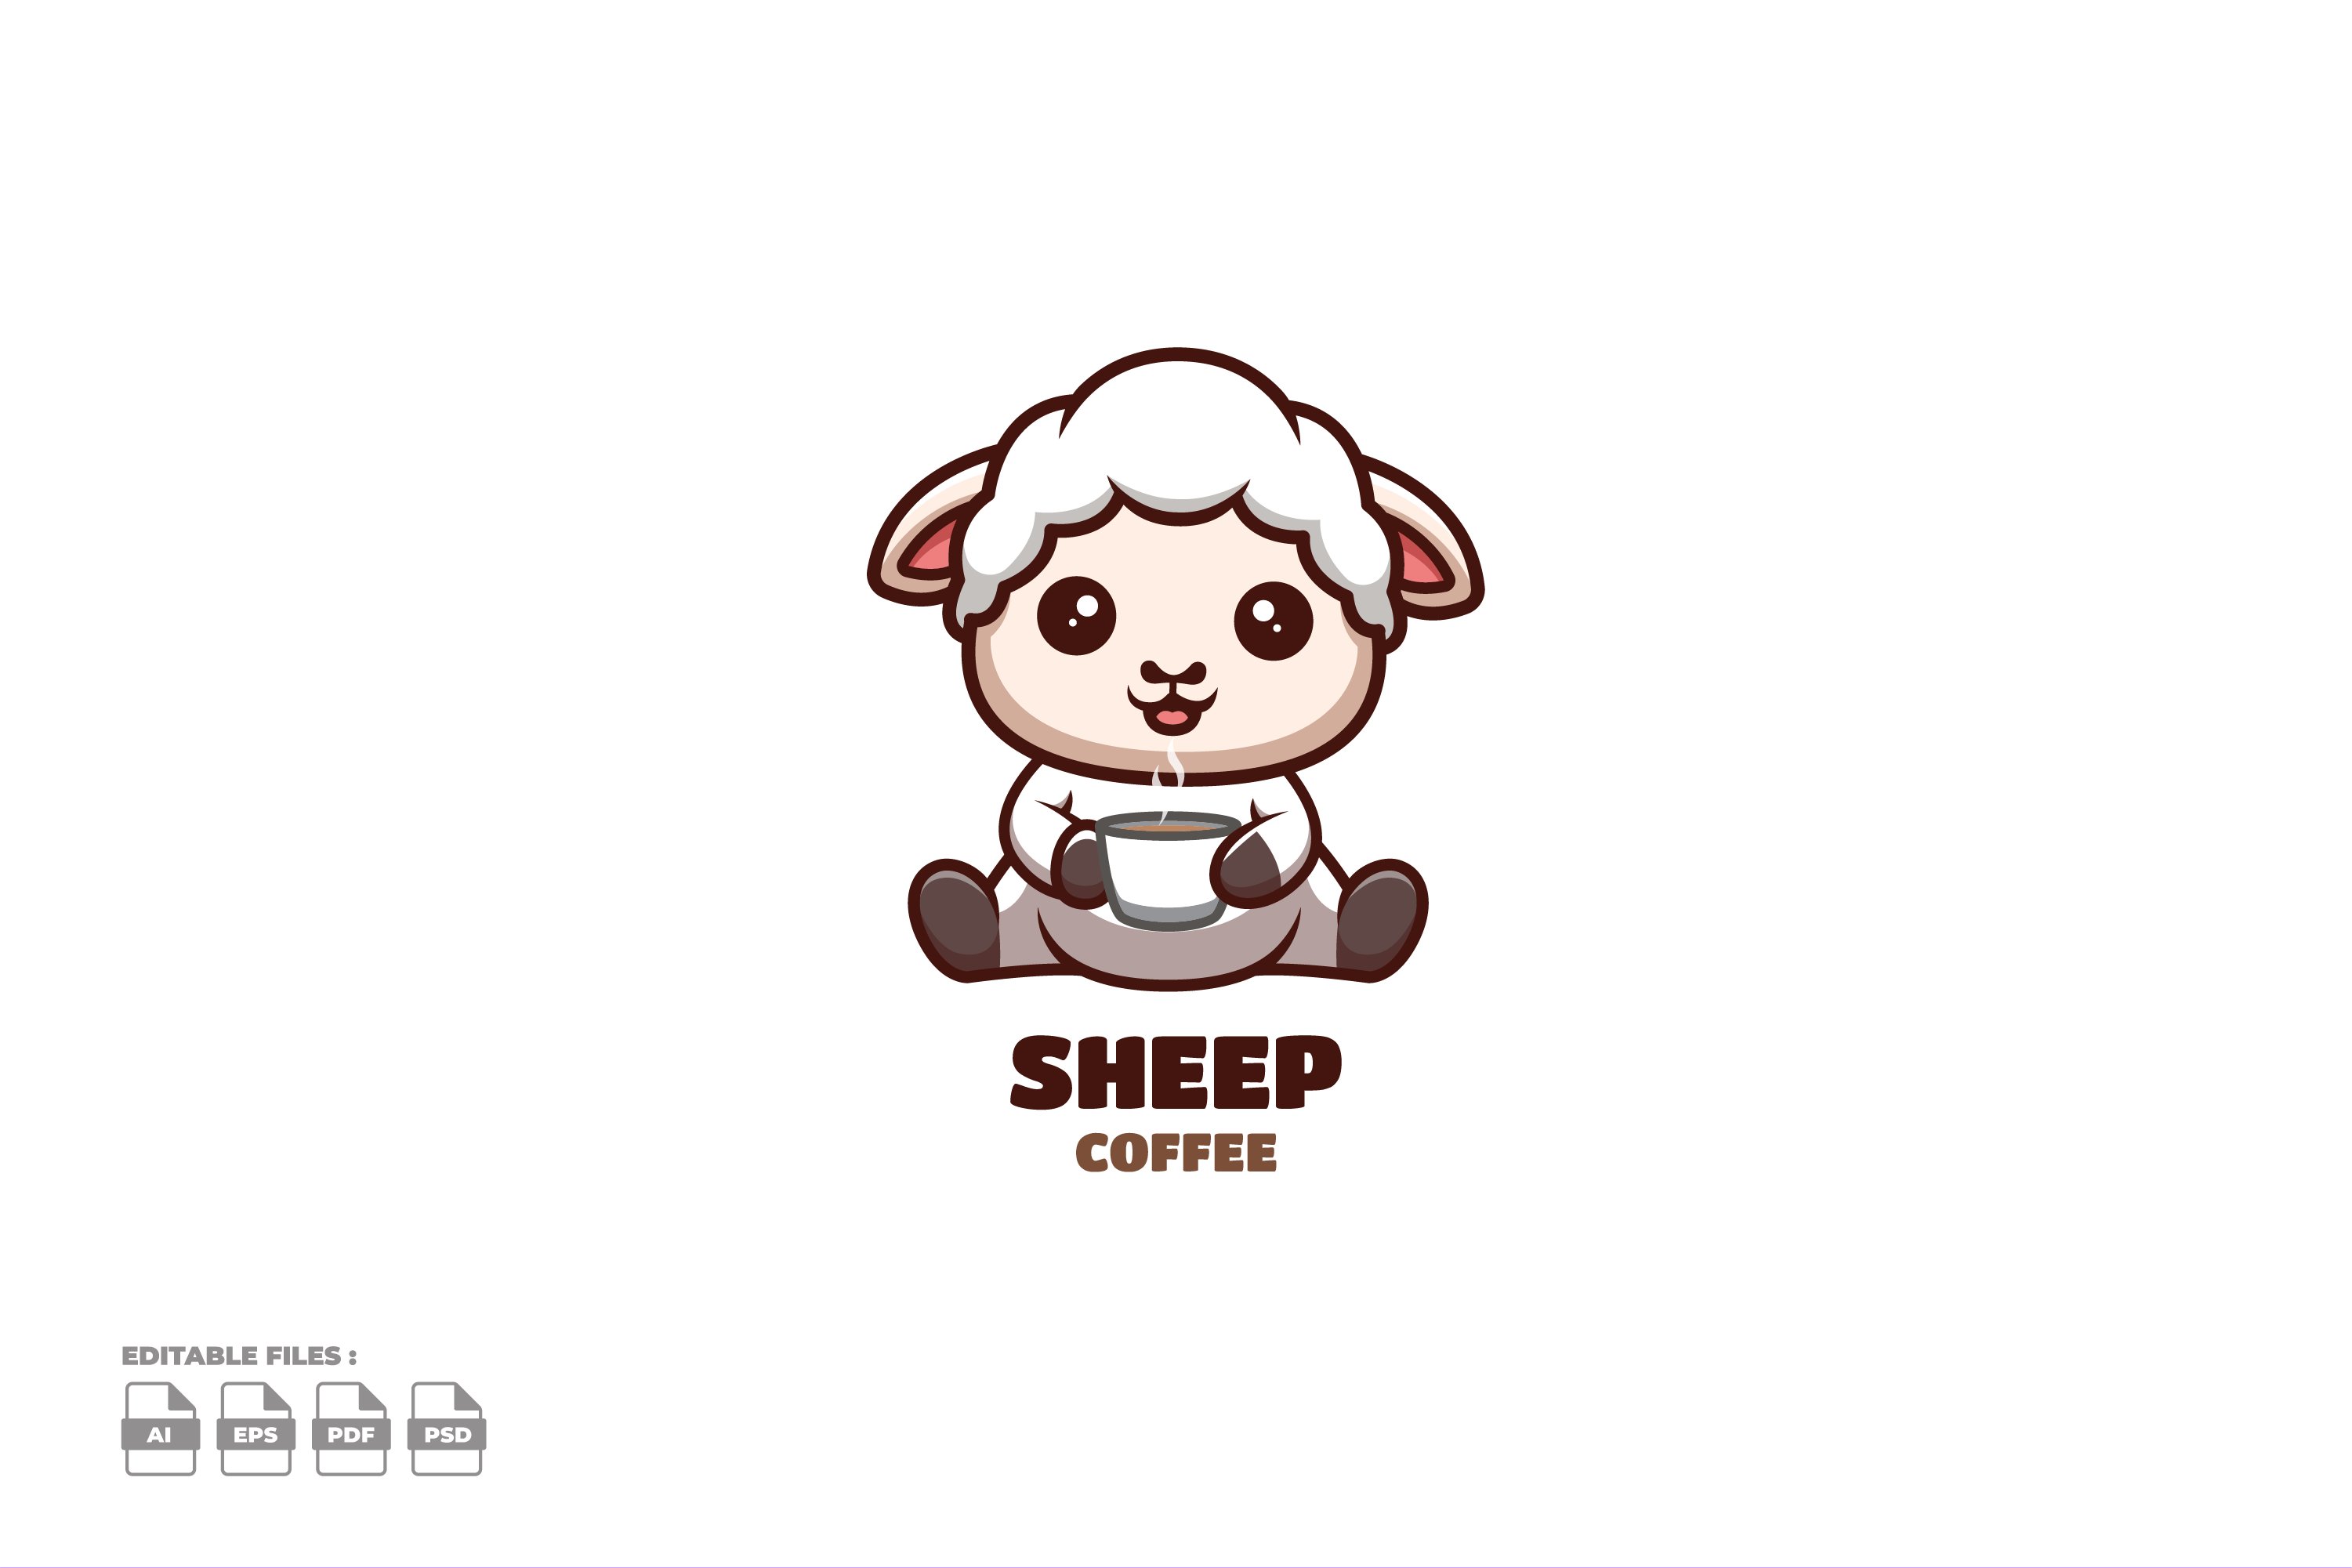 Coffee Sheep Cute Mascot Logo cover image.